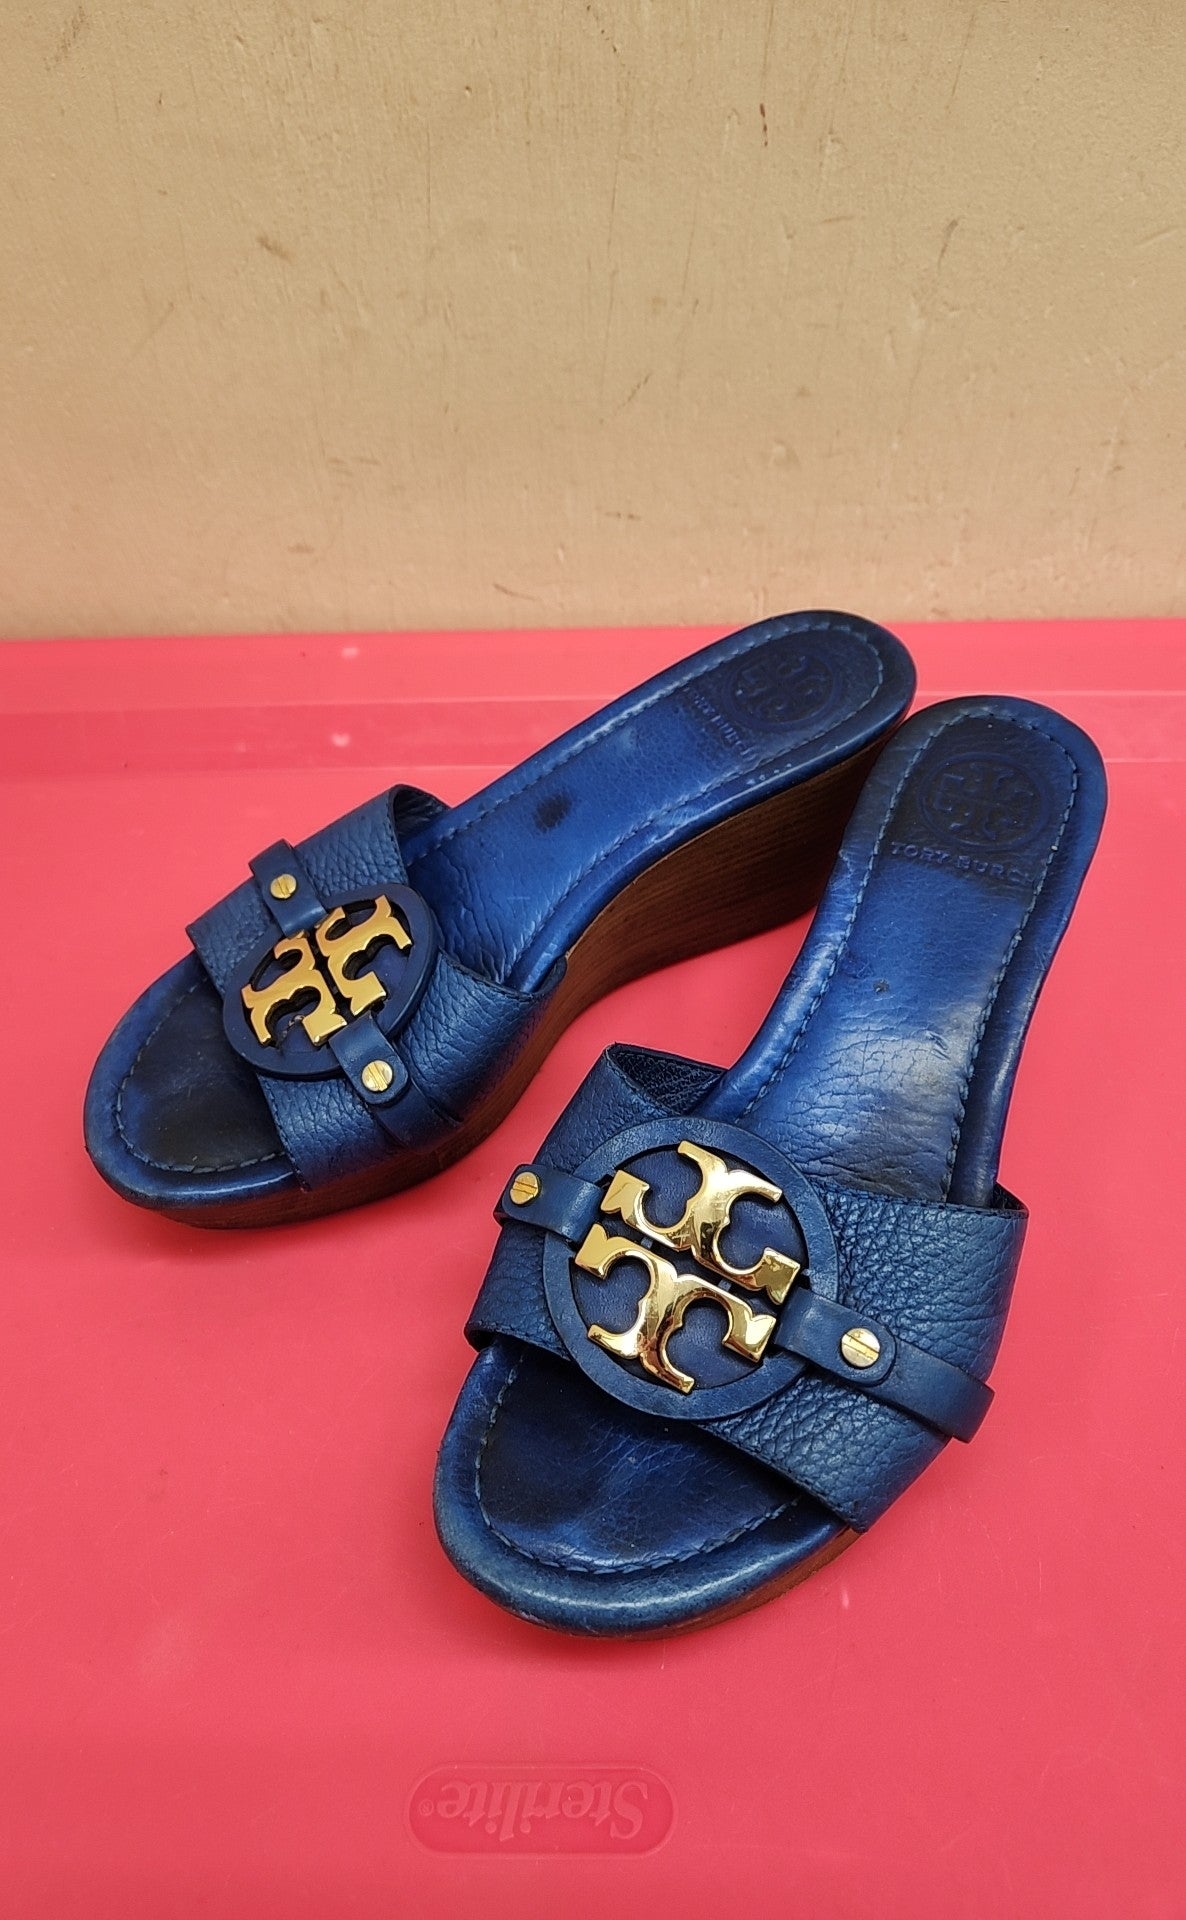 Tory Burch Women's Size 7 Blue Sandals